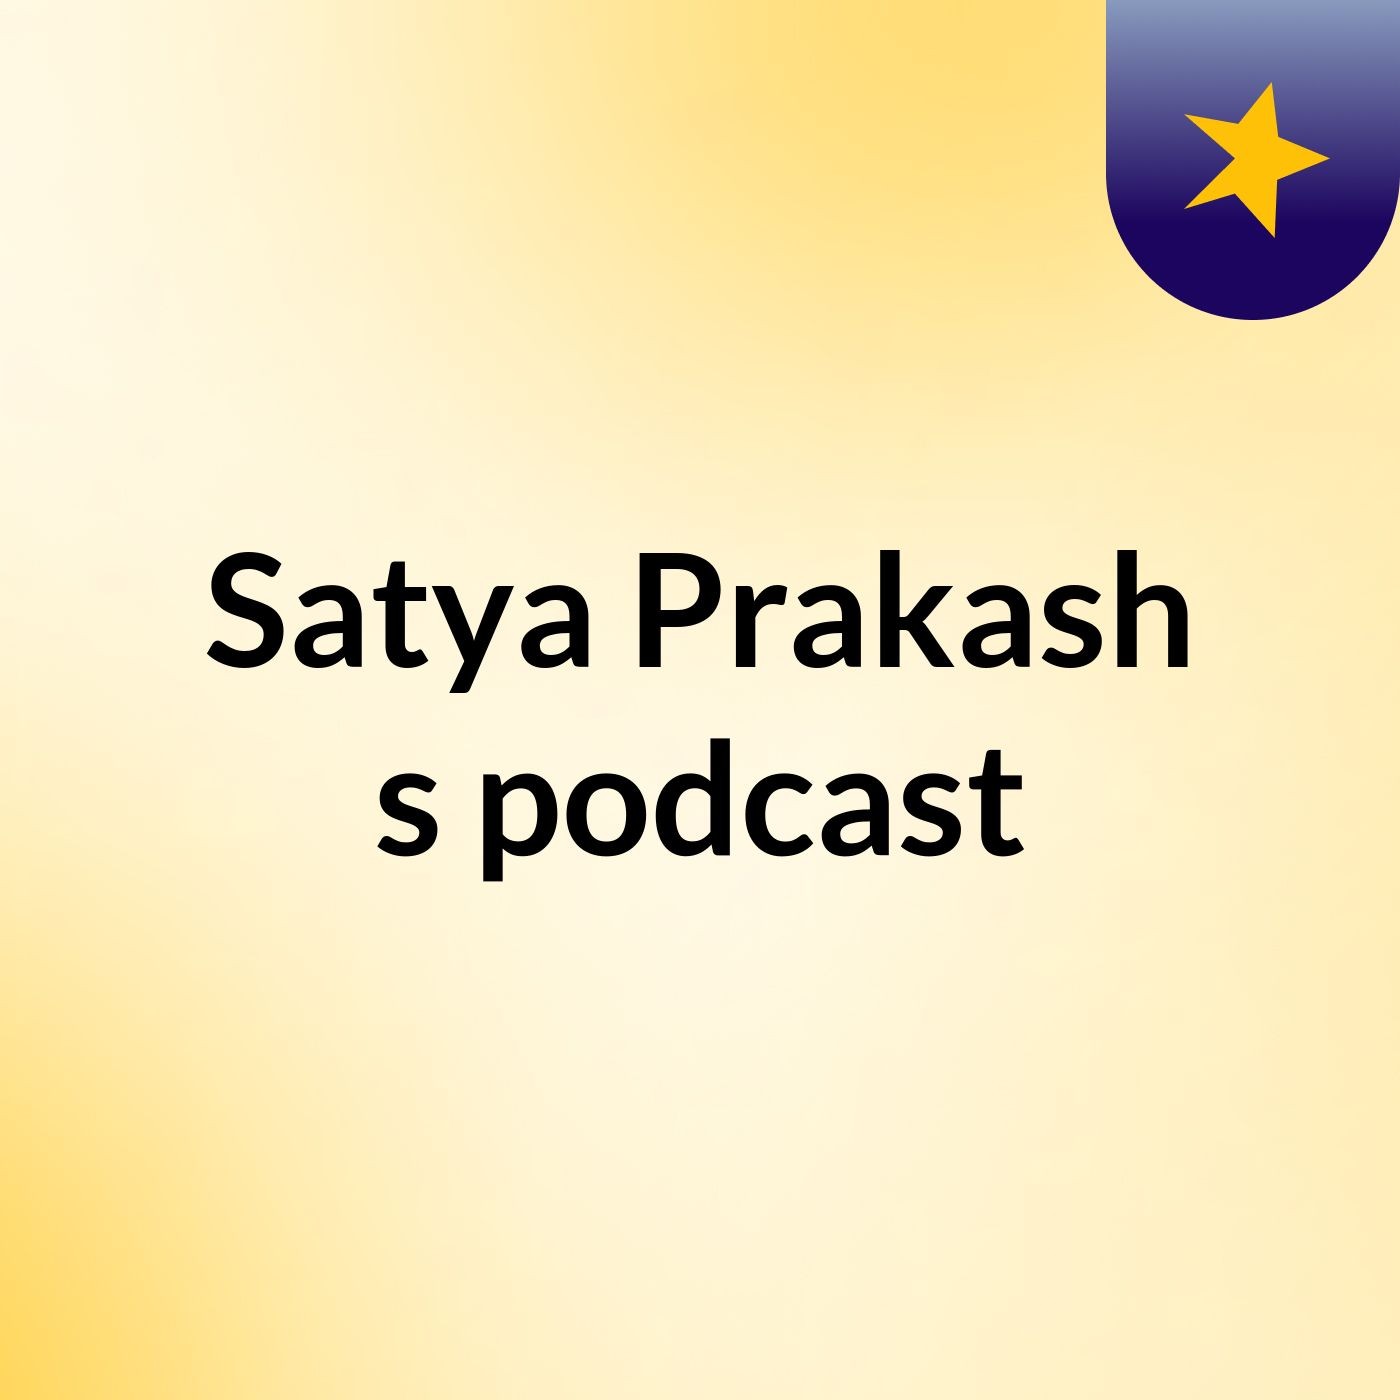 Satya Prakash's podcast